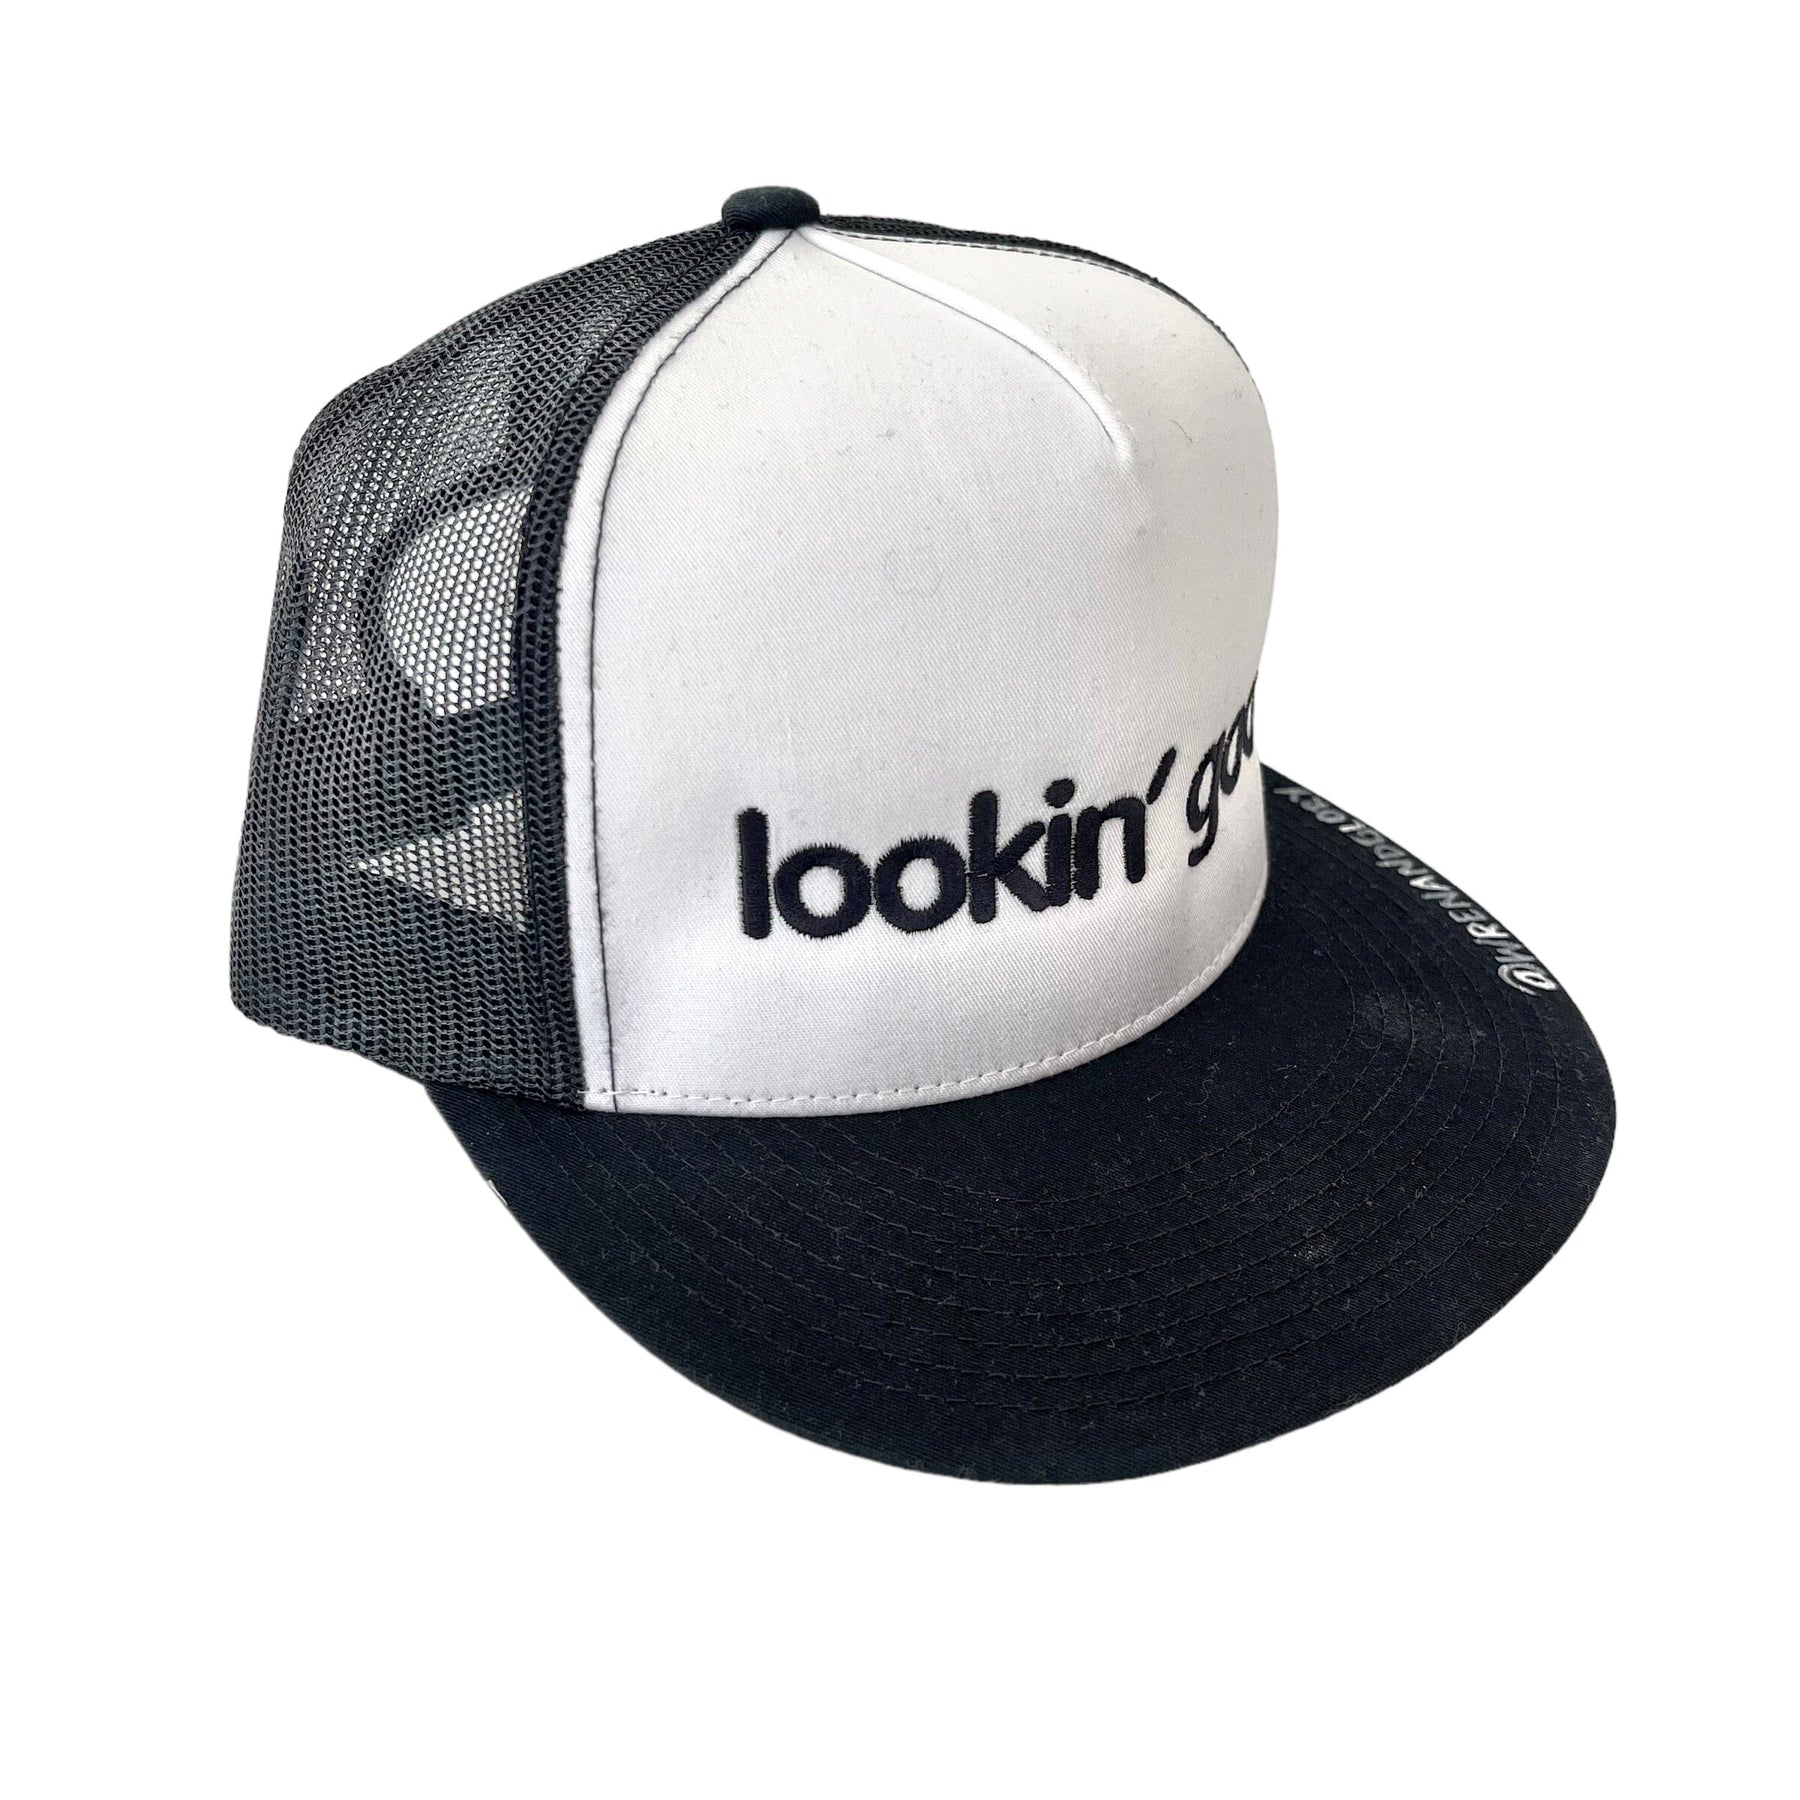 'Good Lookin' Trucker Hat